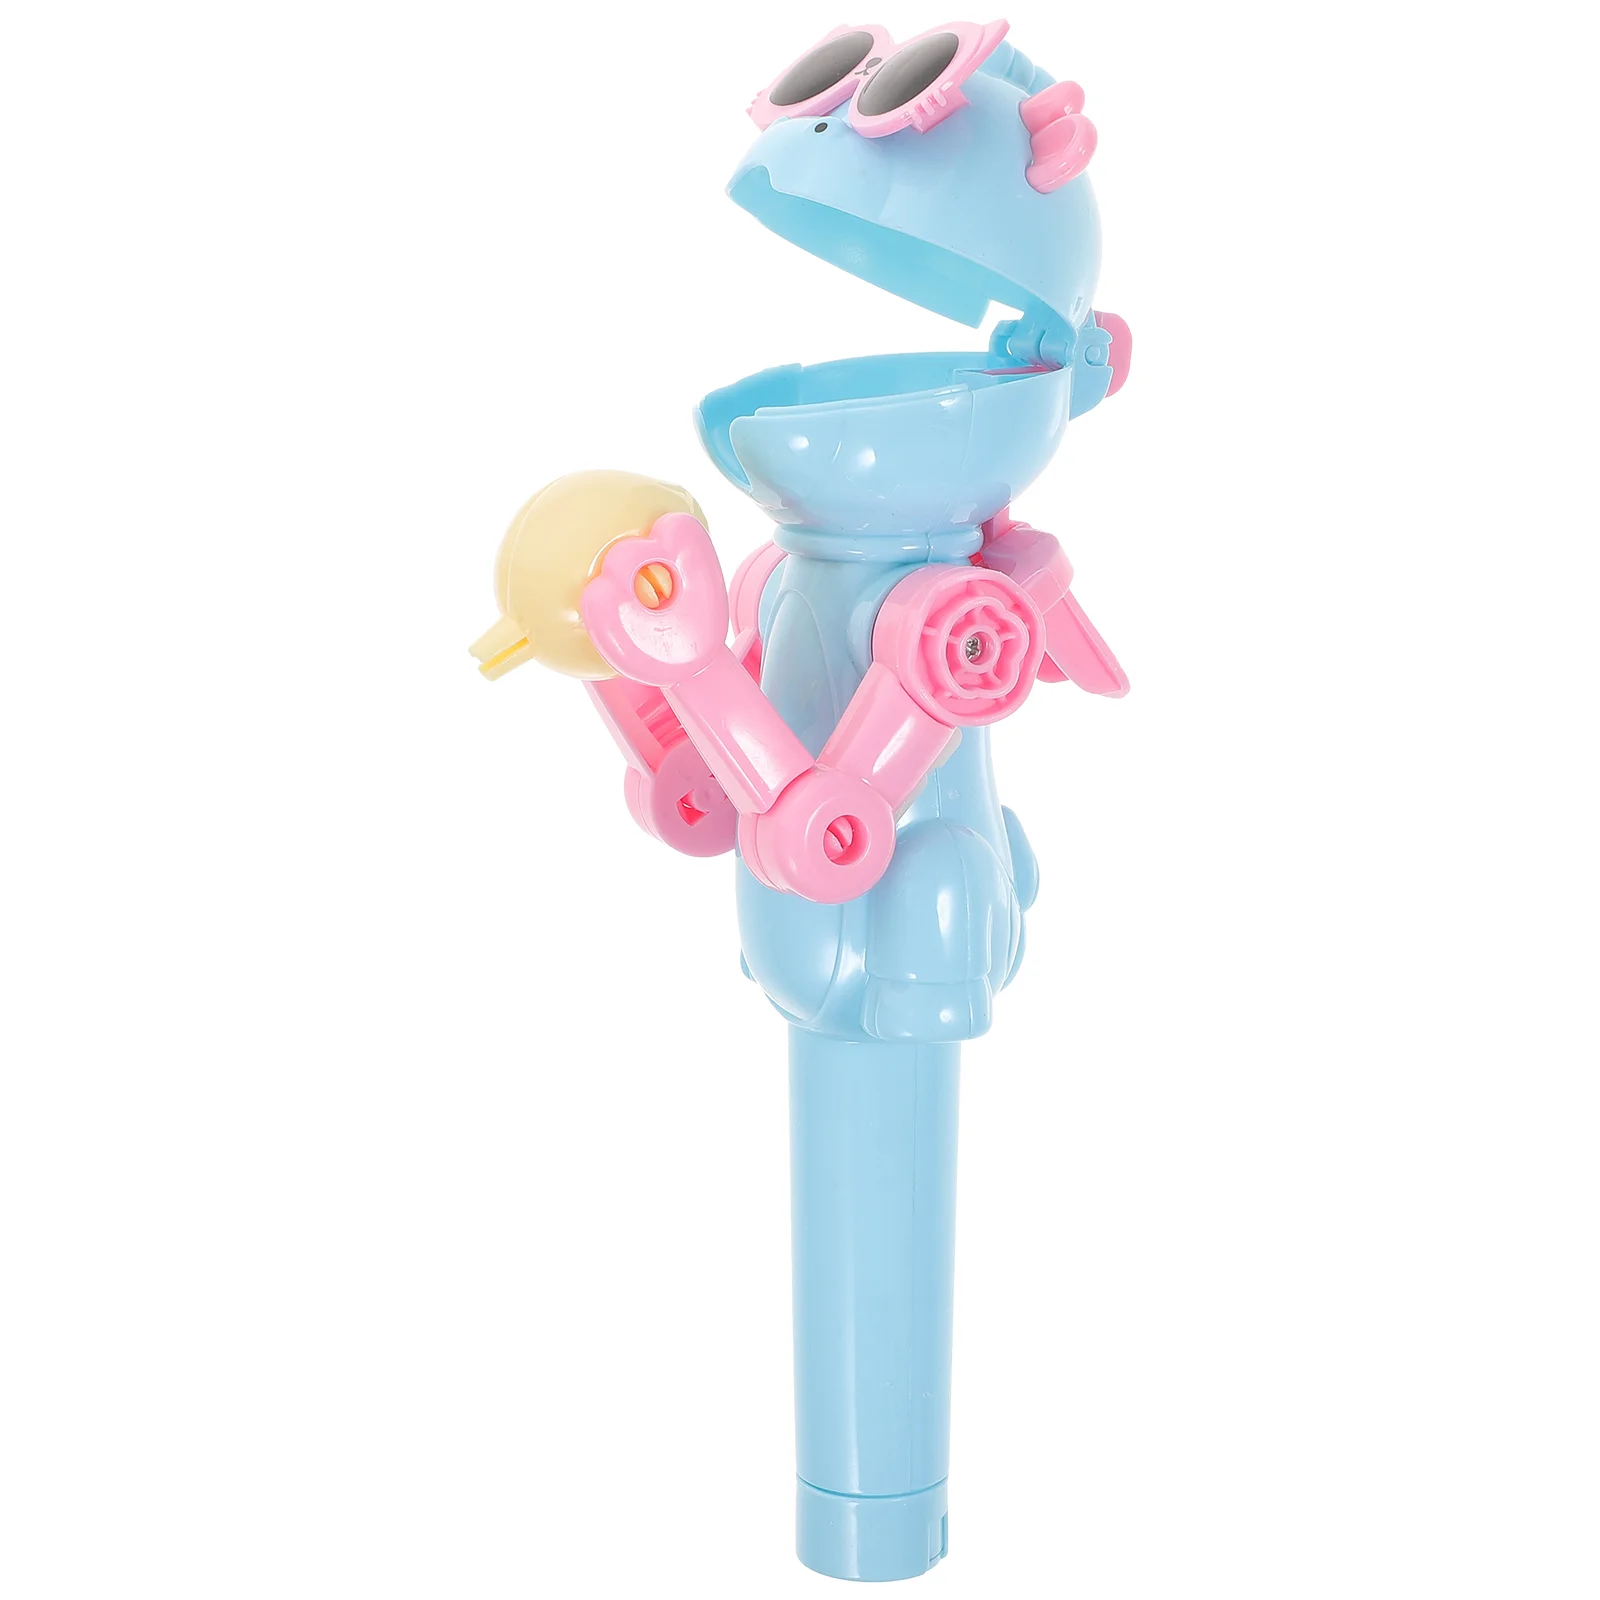 

Creative Lollipop Robot Holder Novelty Dinosaur Shape Kids Gift for Children Lollipop Candy Storage